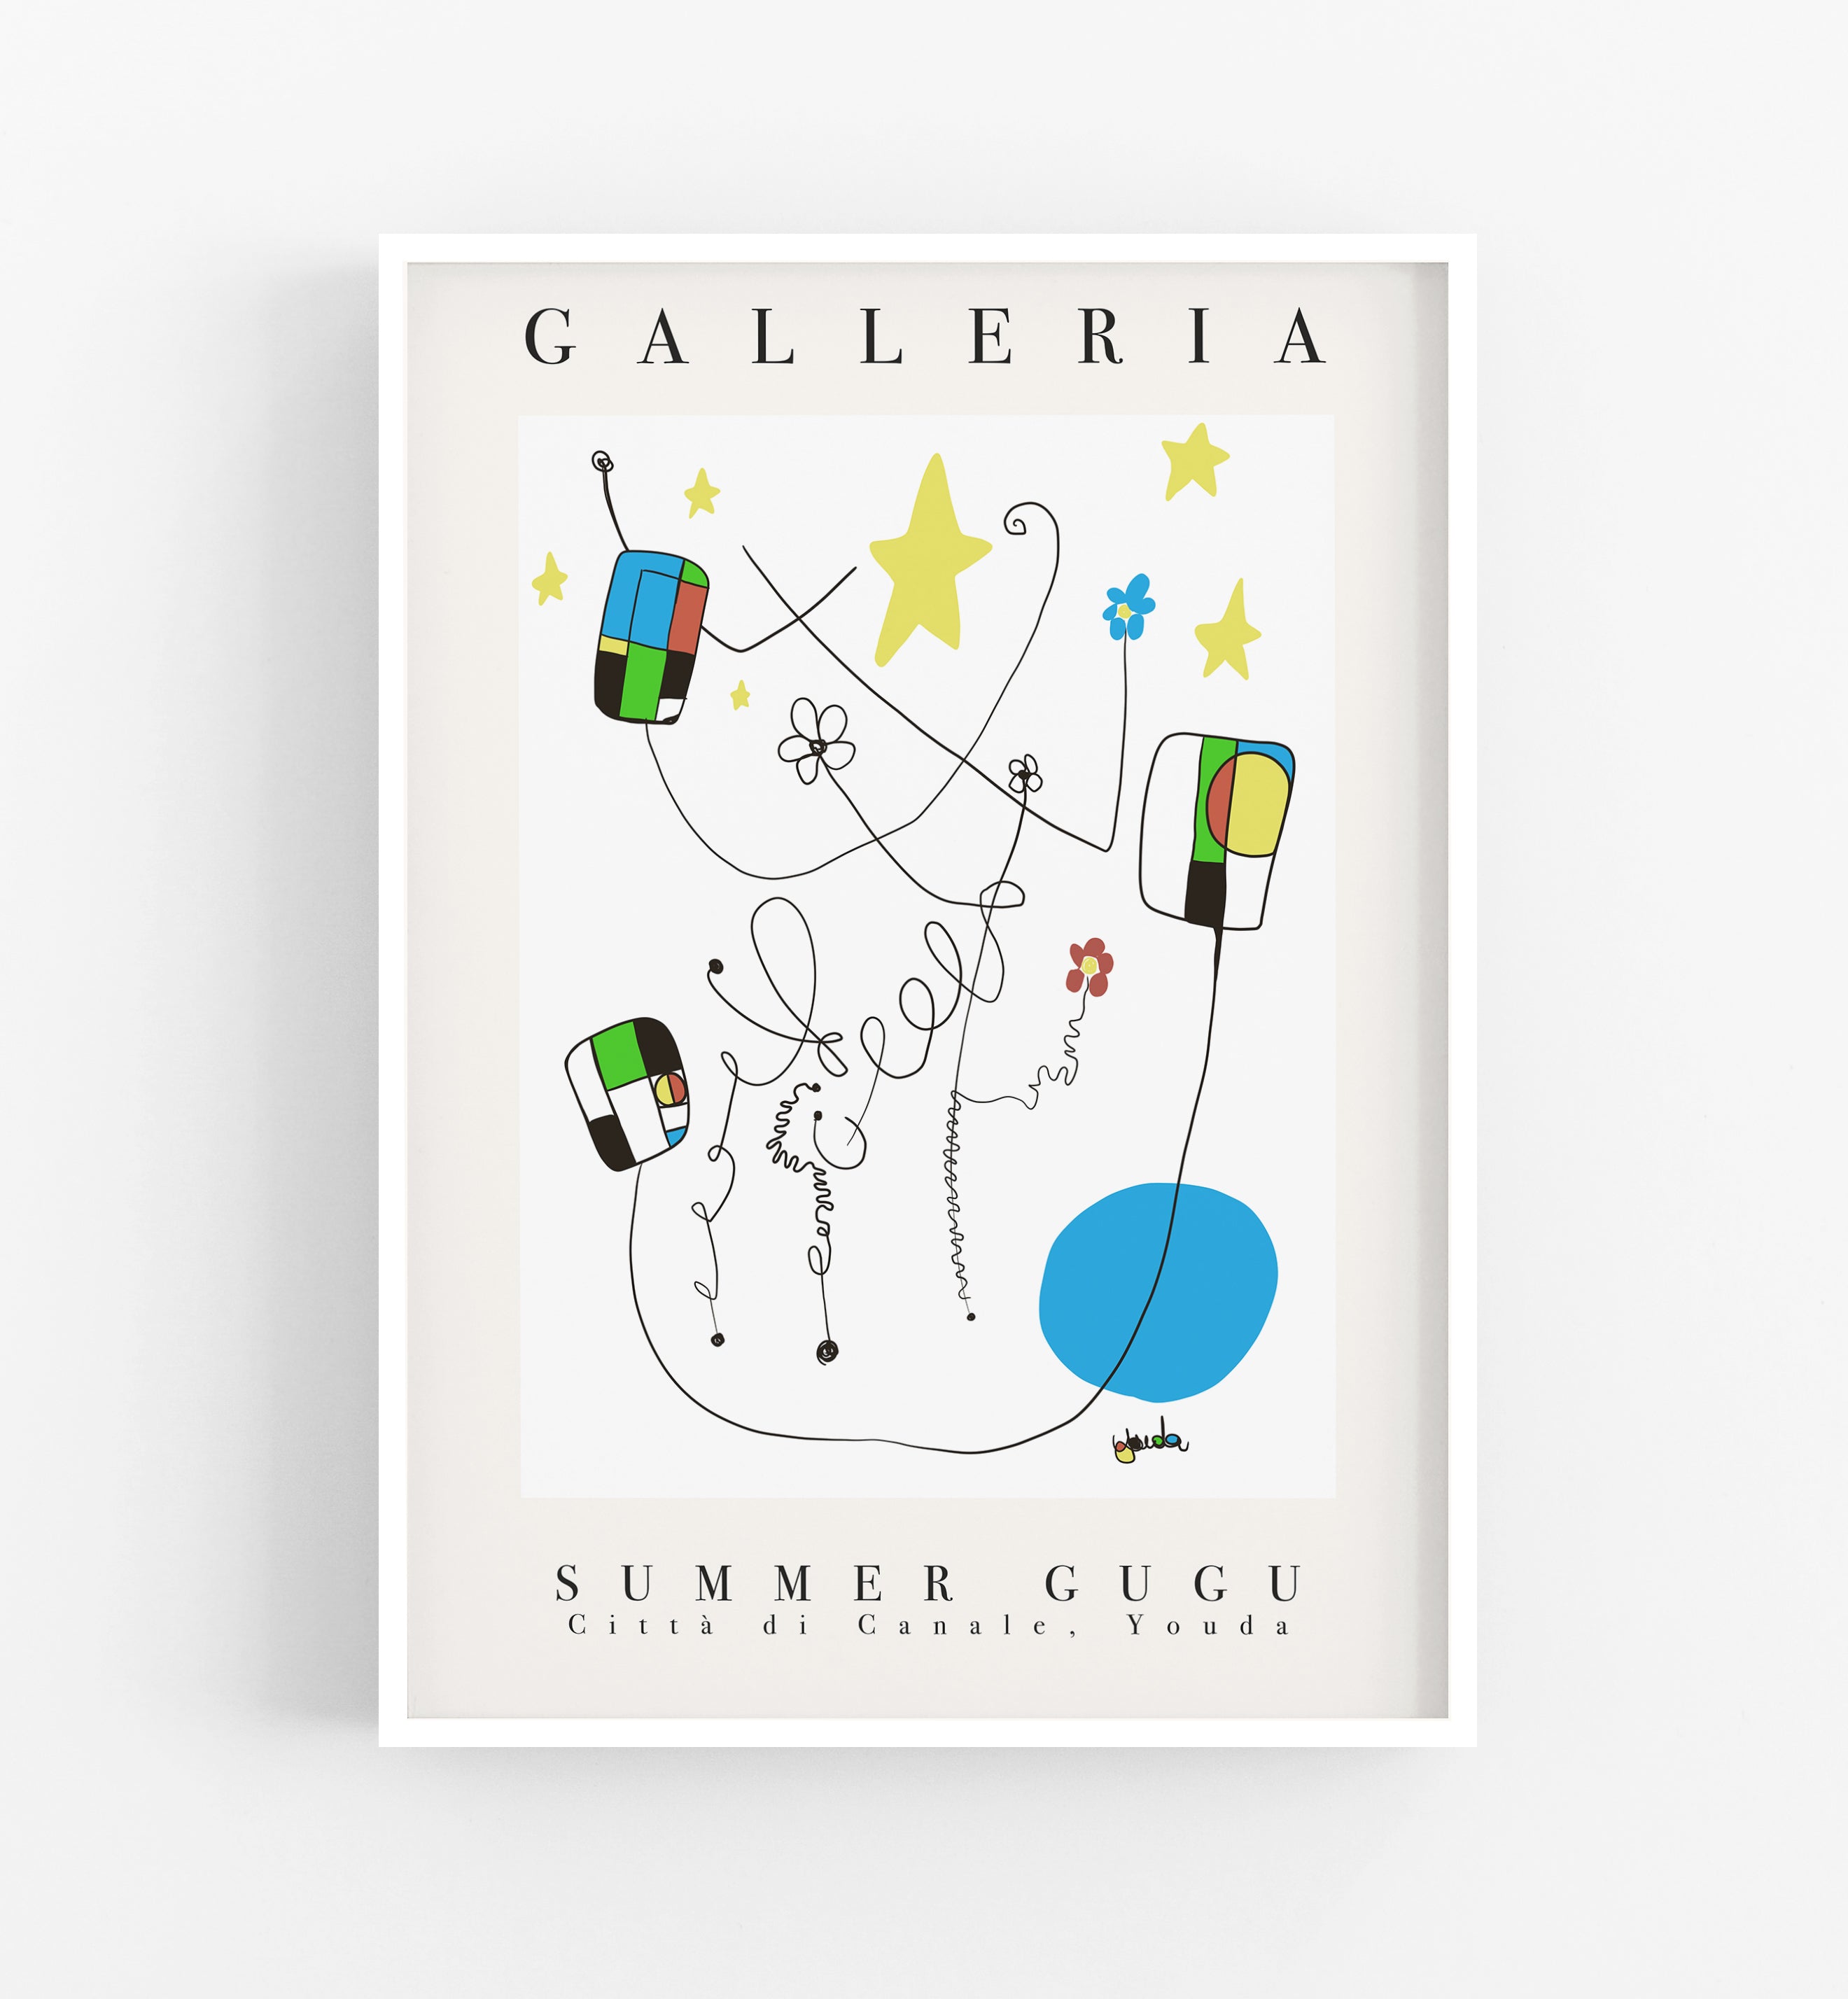 Galleria Summer Gugu